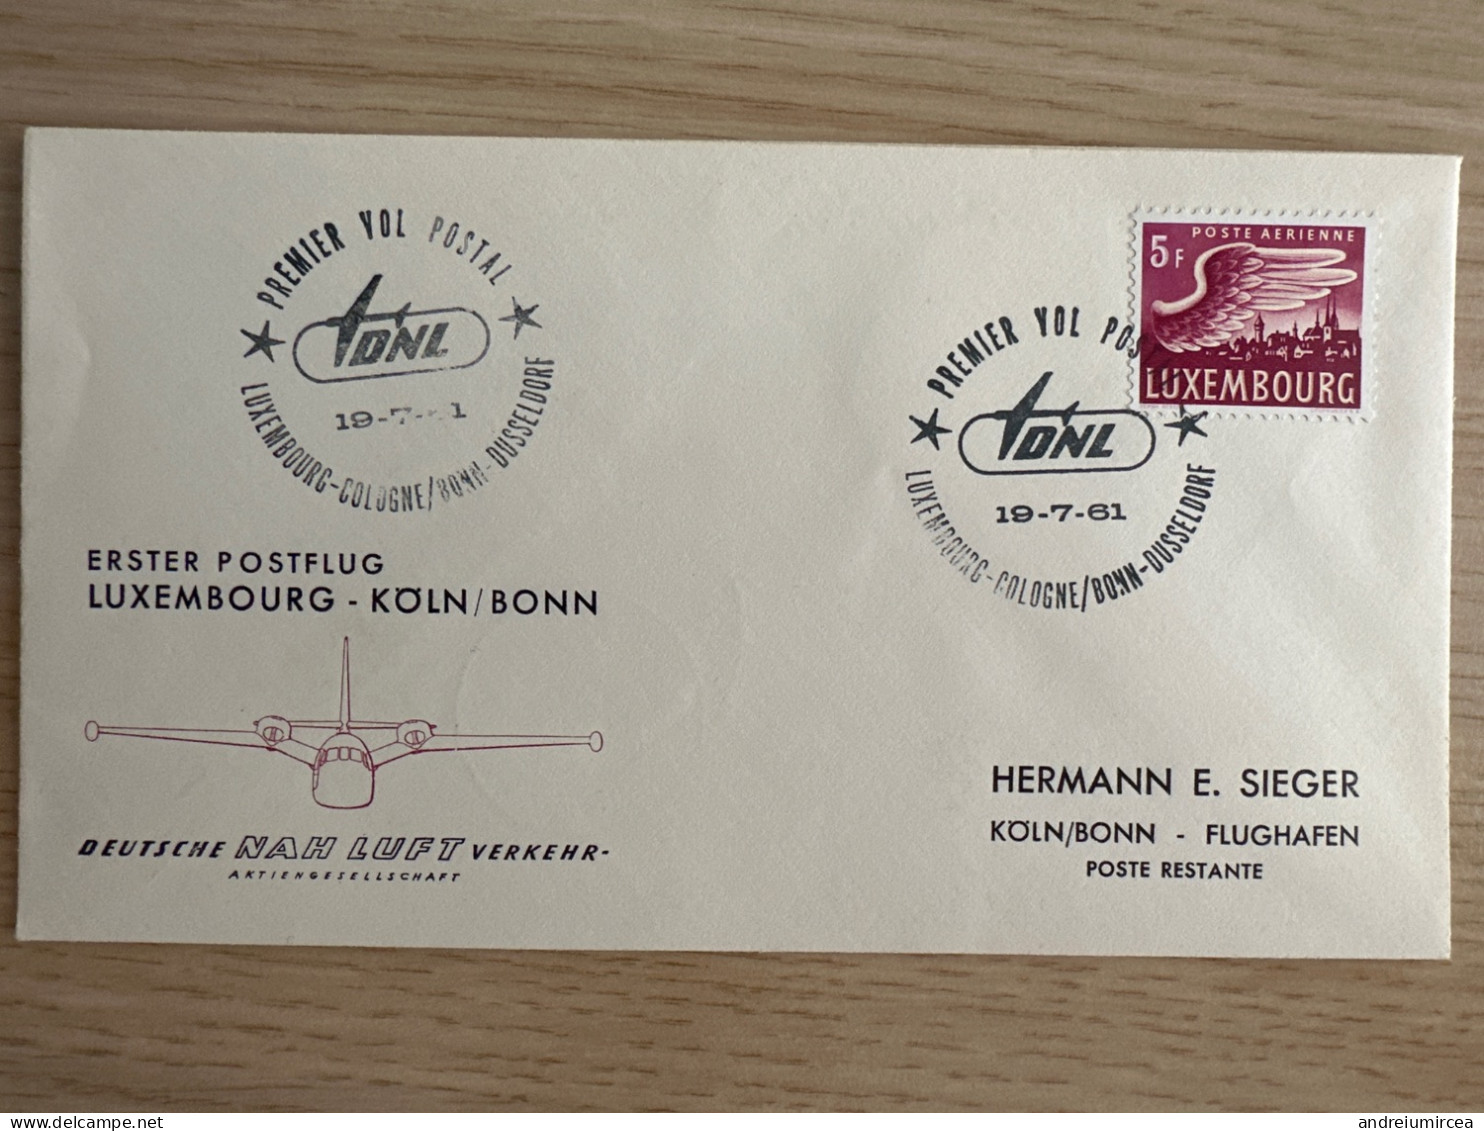 1961 Premier Vol Postal Luxembourg-Koln/Bonn - Cartas & Documentos